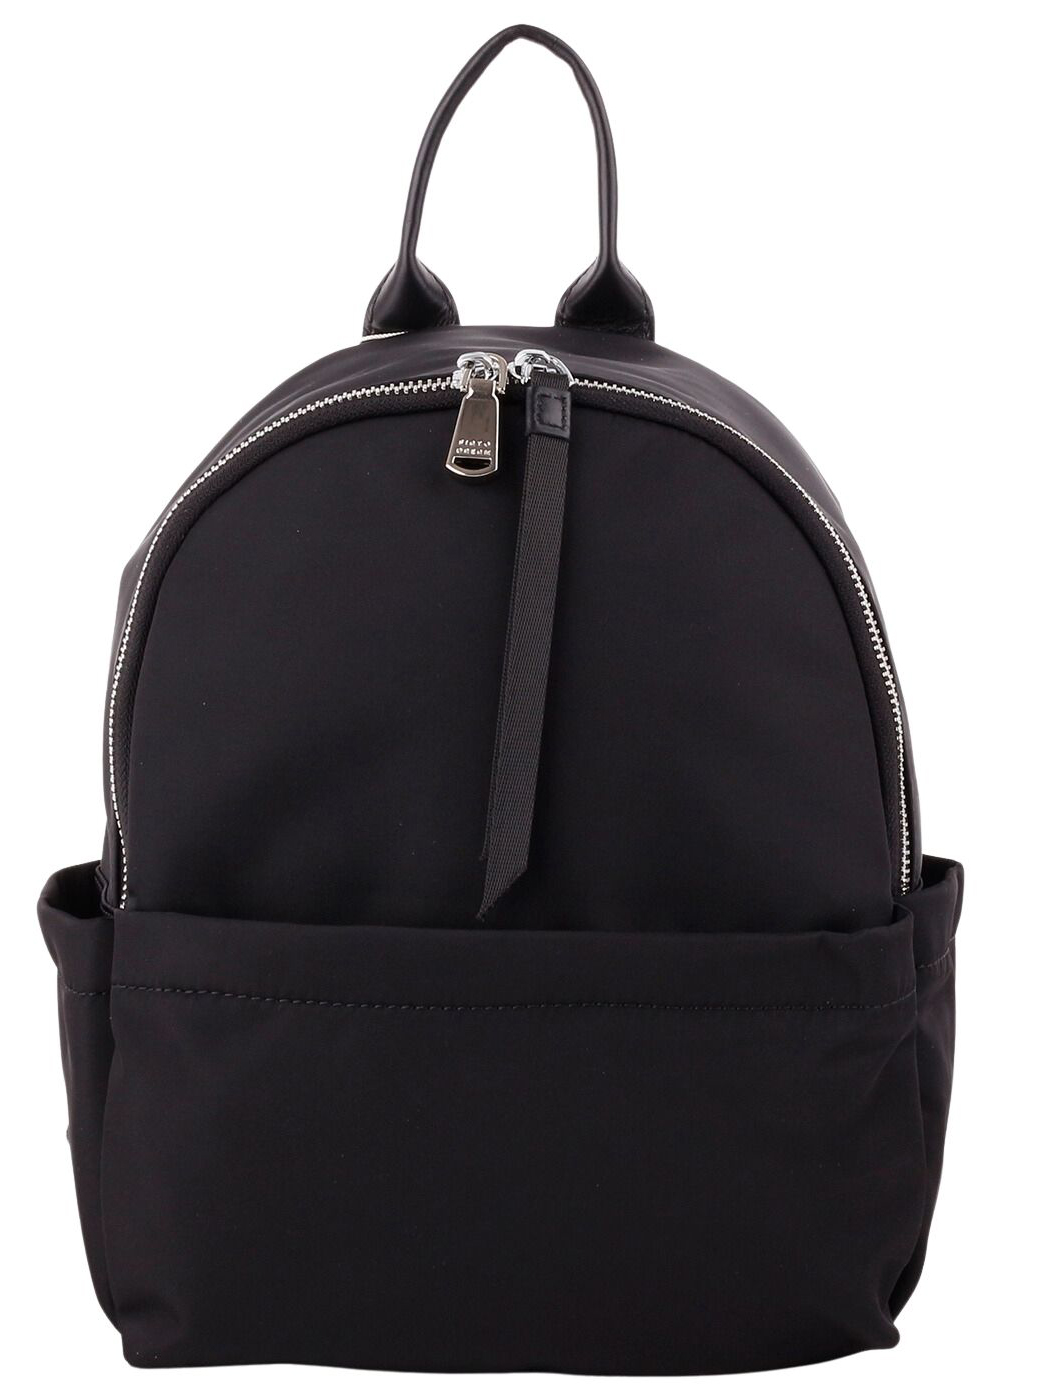 Рюкзак женский Fiato Dream 1001 черный, 27х25х10 см